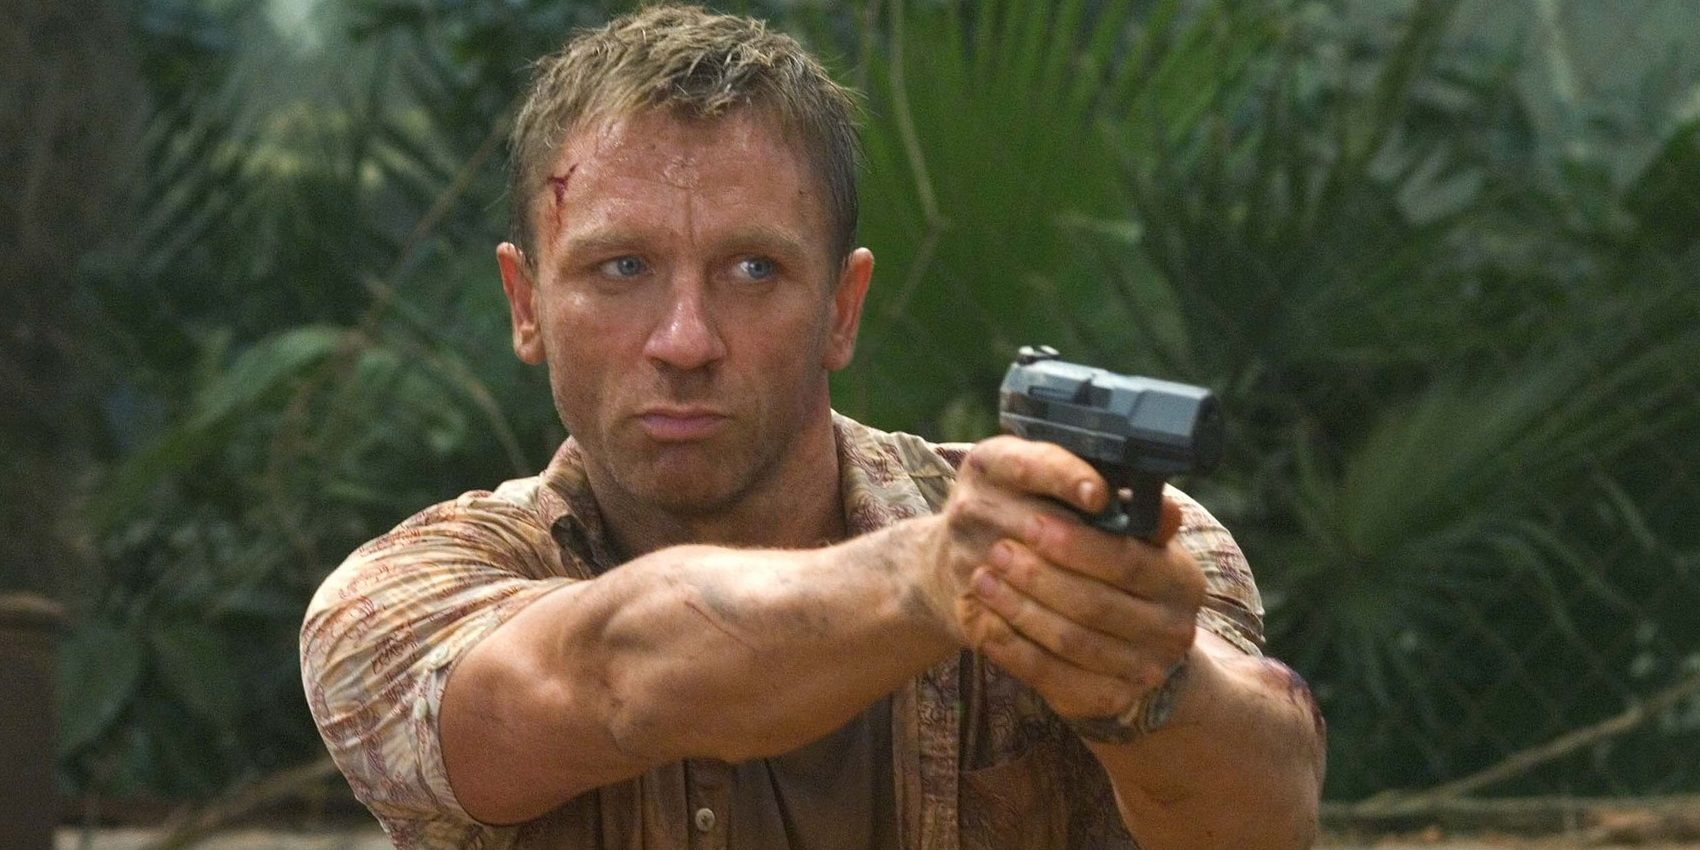 An image of Daniel Craig holding a gun in Casino Royale